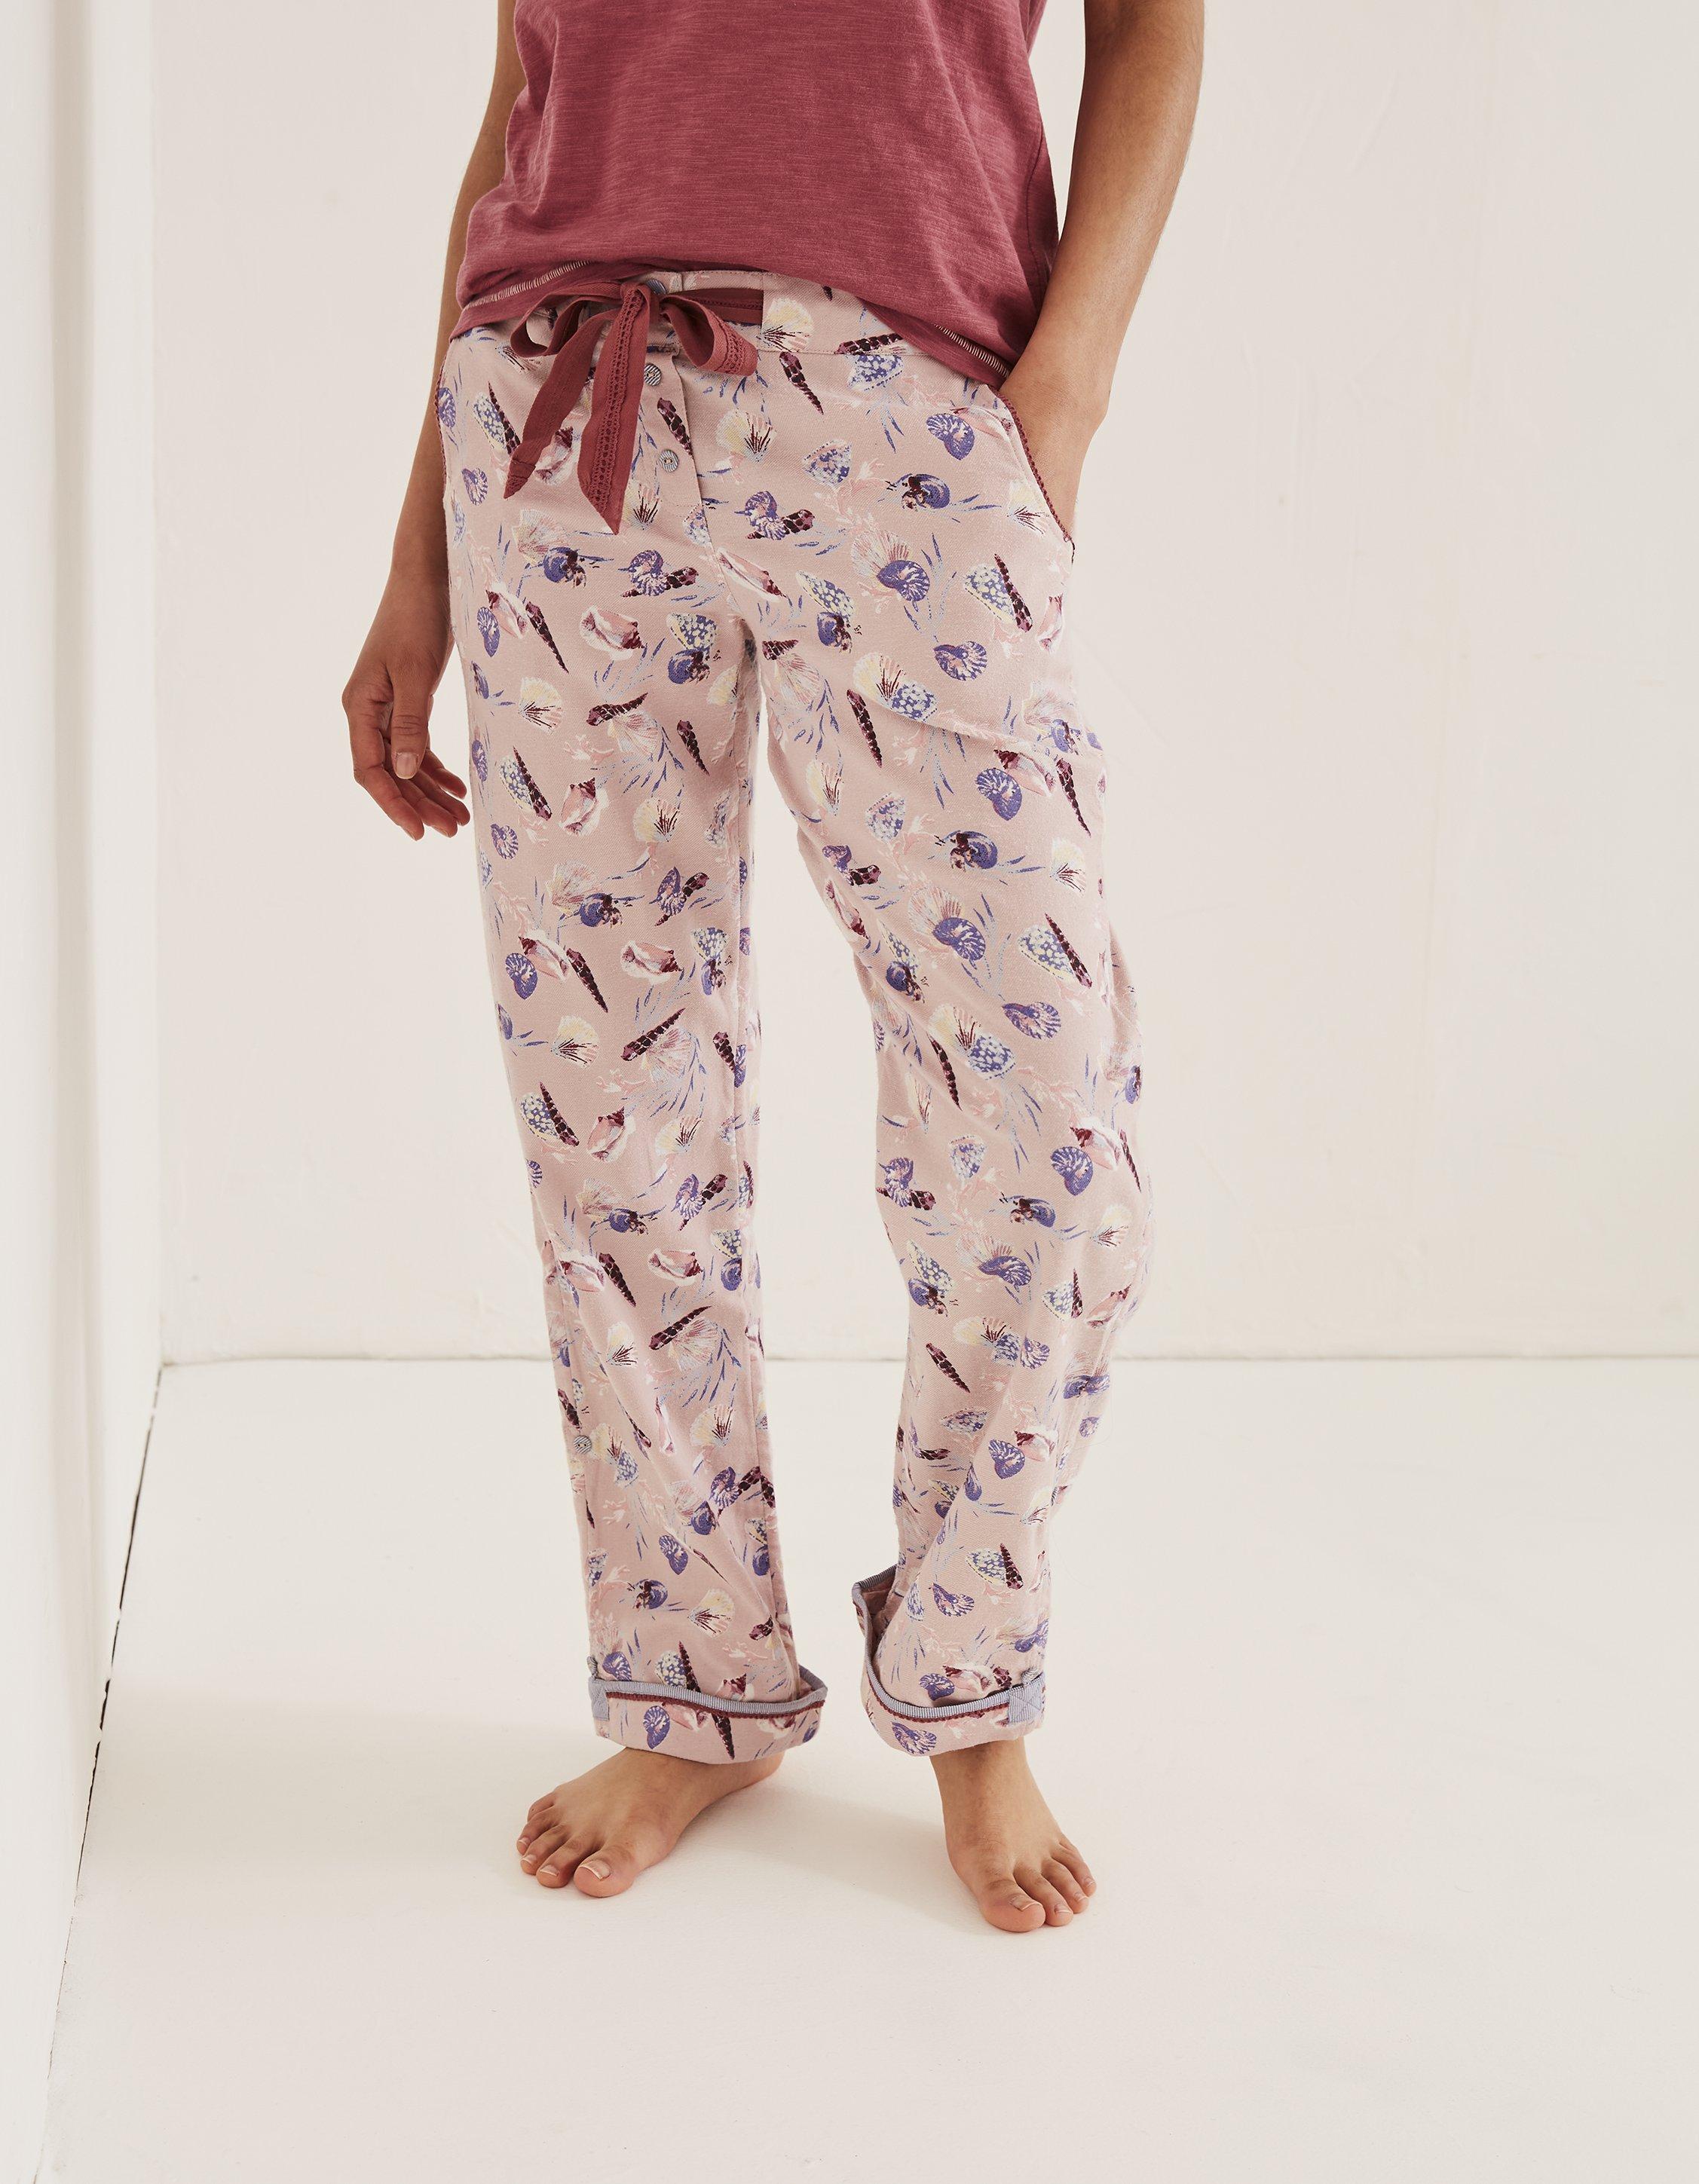 Women's Sea Turtle Pajama Pants Lounge Pants XS H020531, H020531, X-Large :  : Clothing, Shoes & Accessories